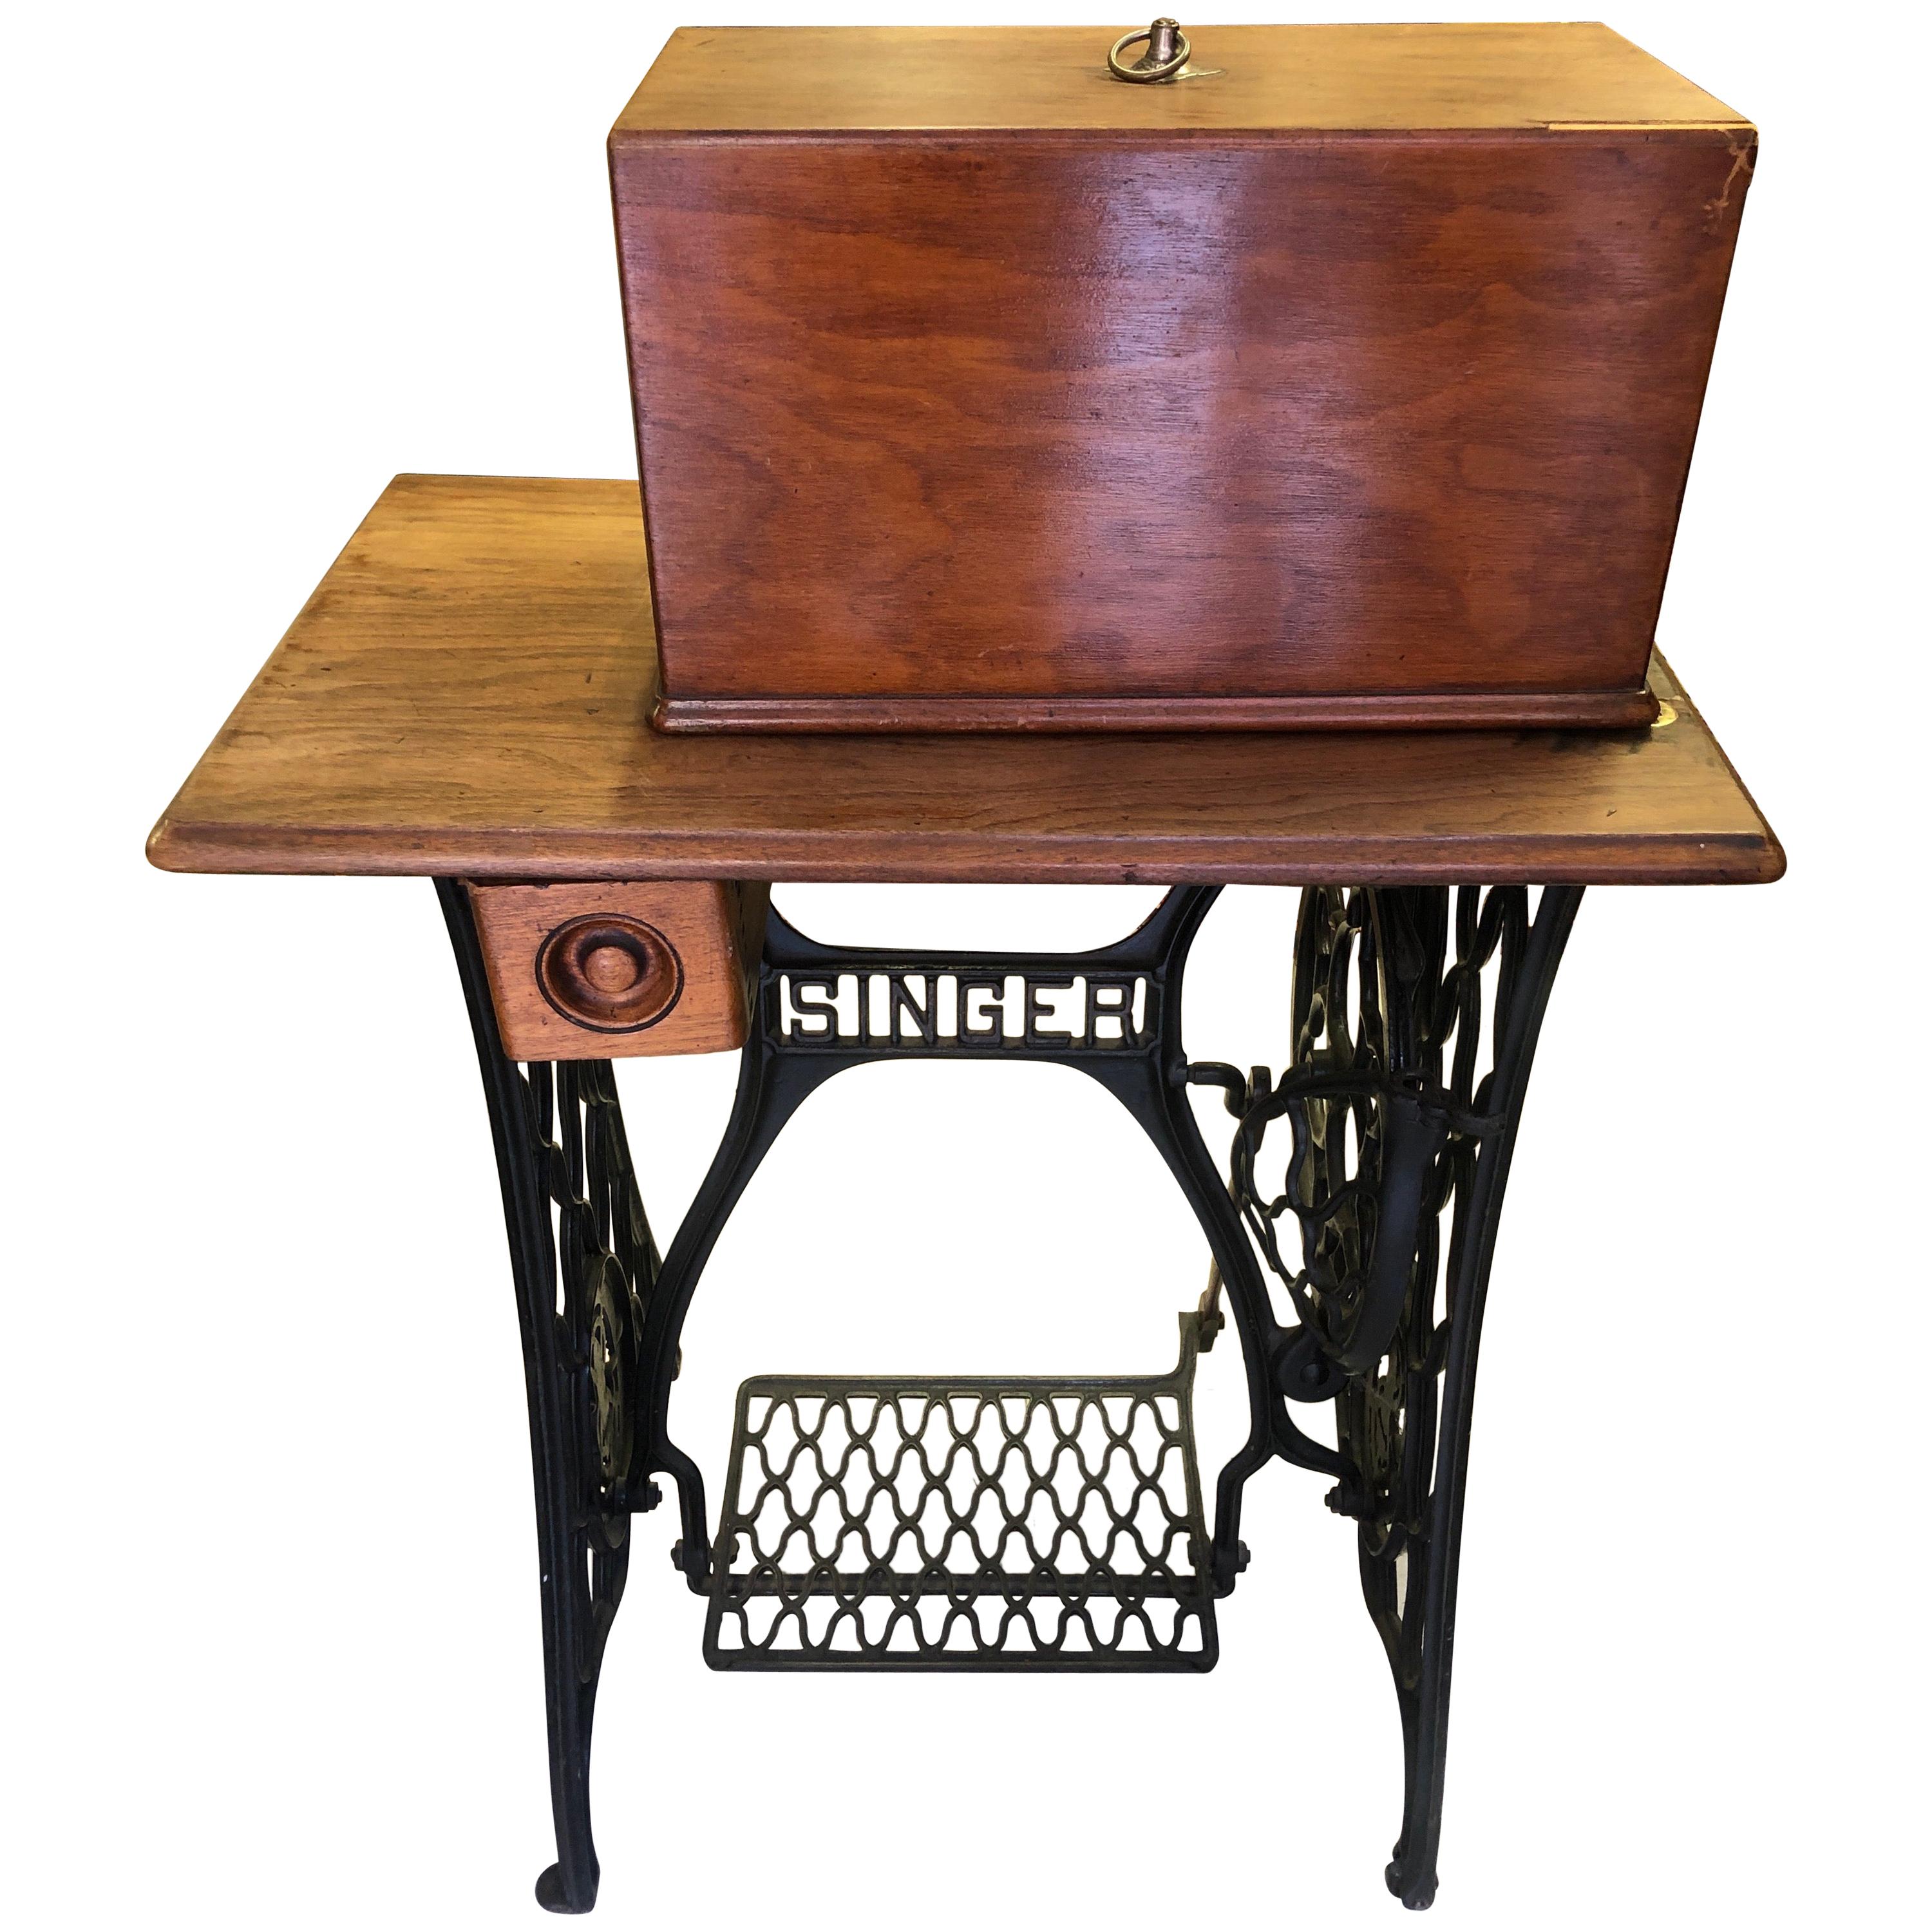 Vintage Singer Sewing Machine on Original Cast Iron Base 